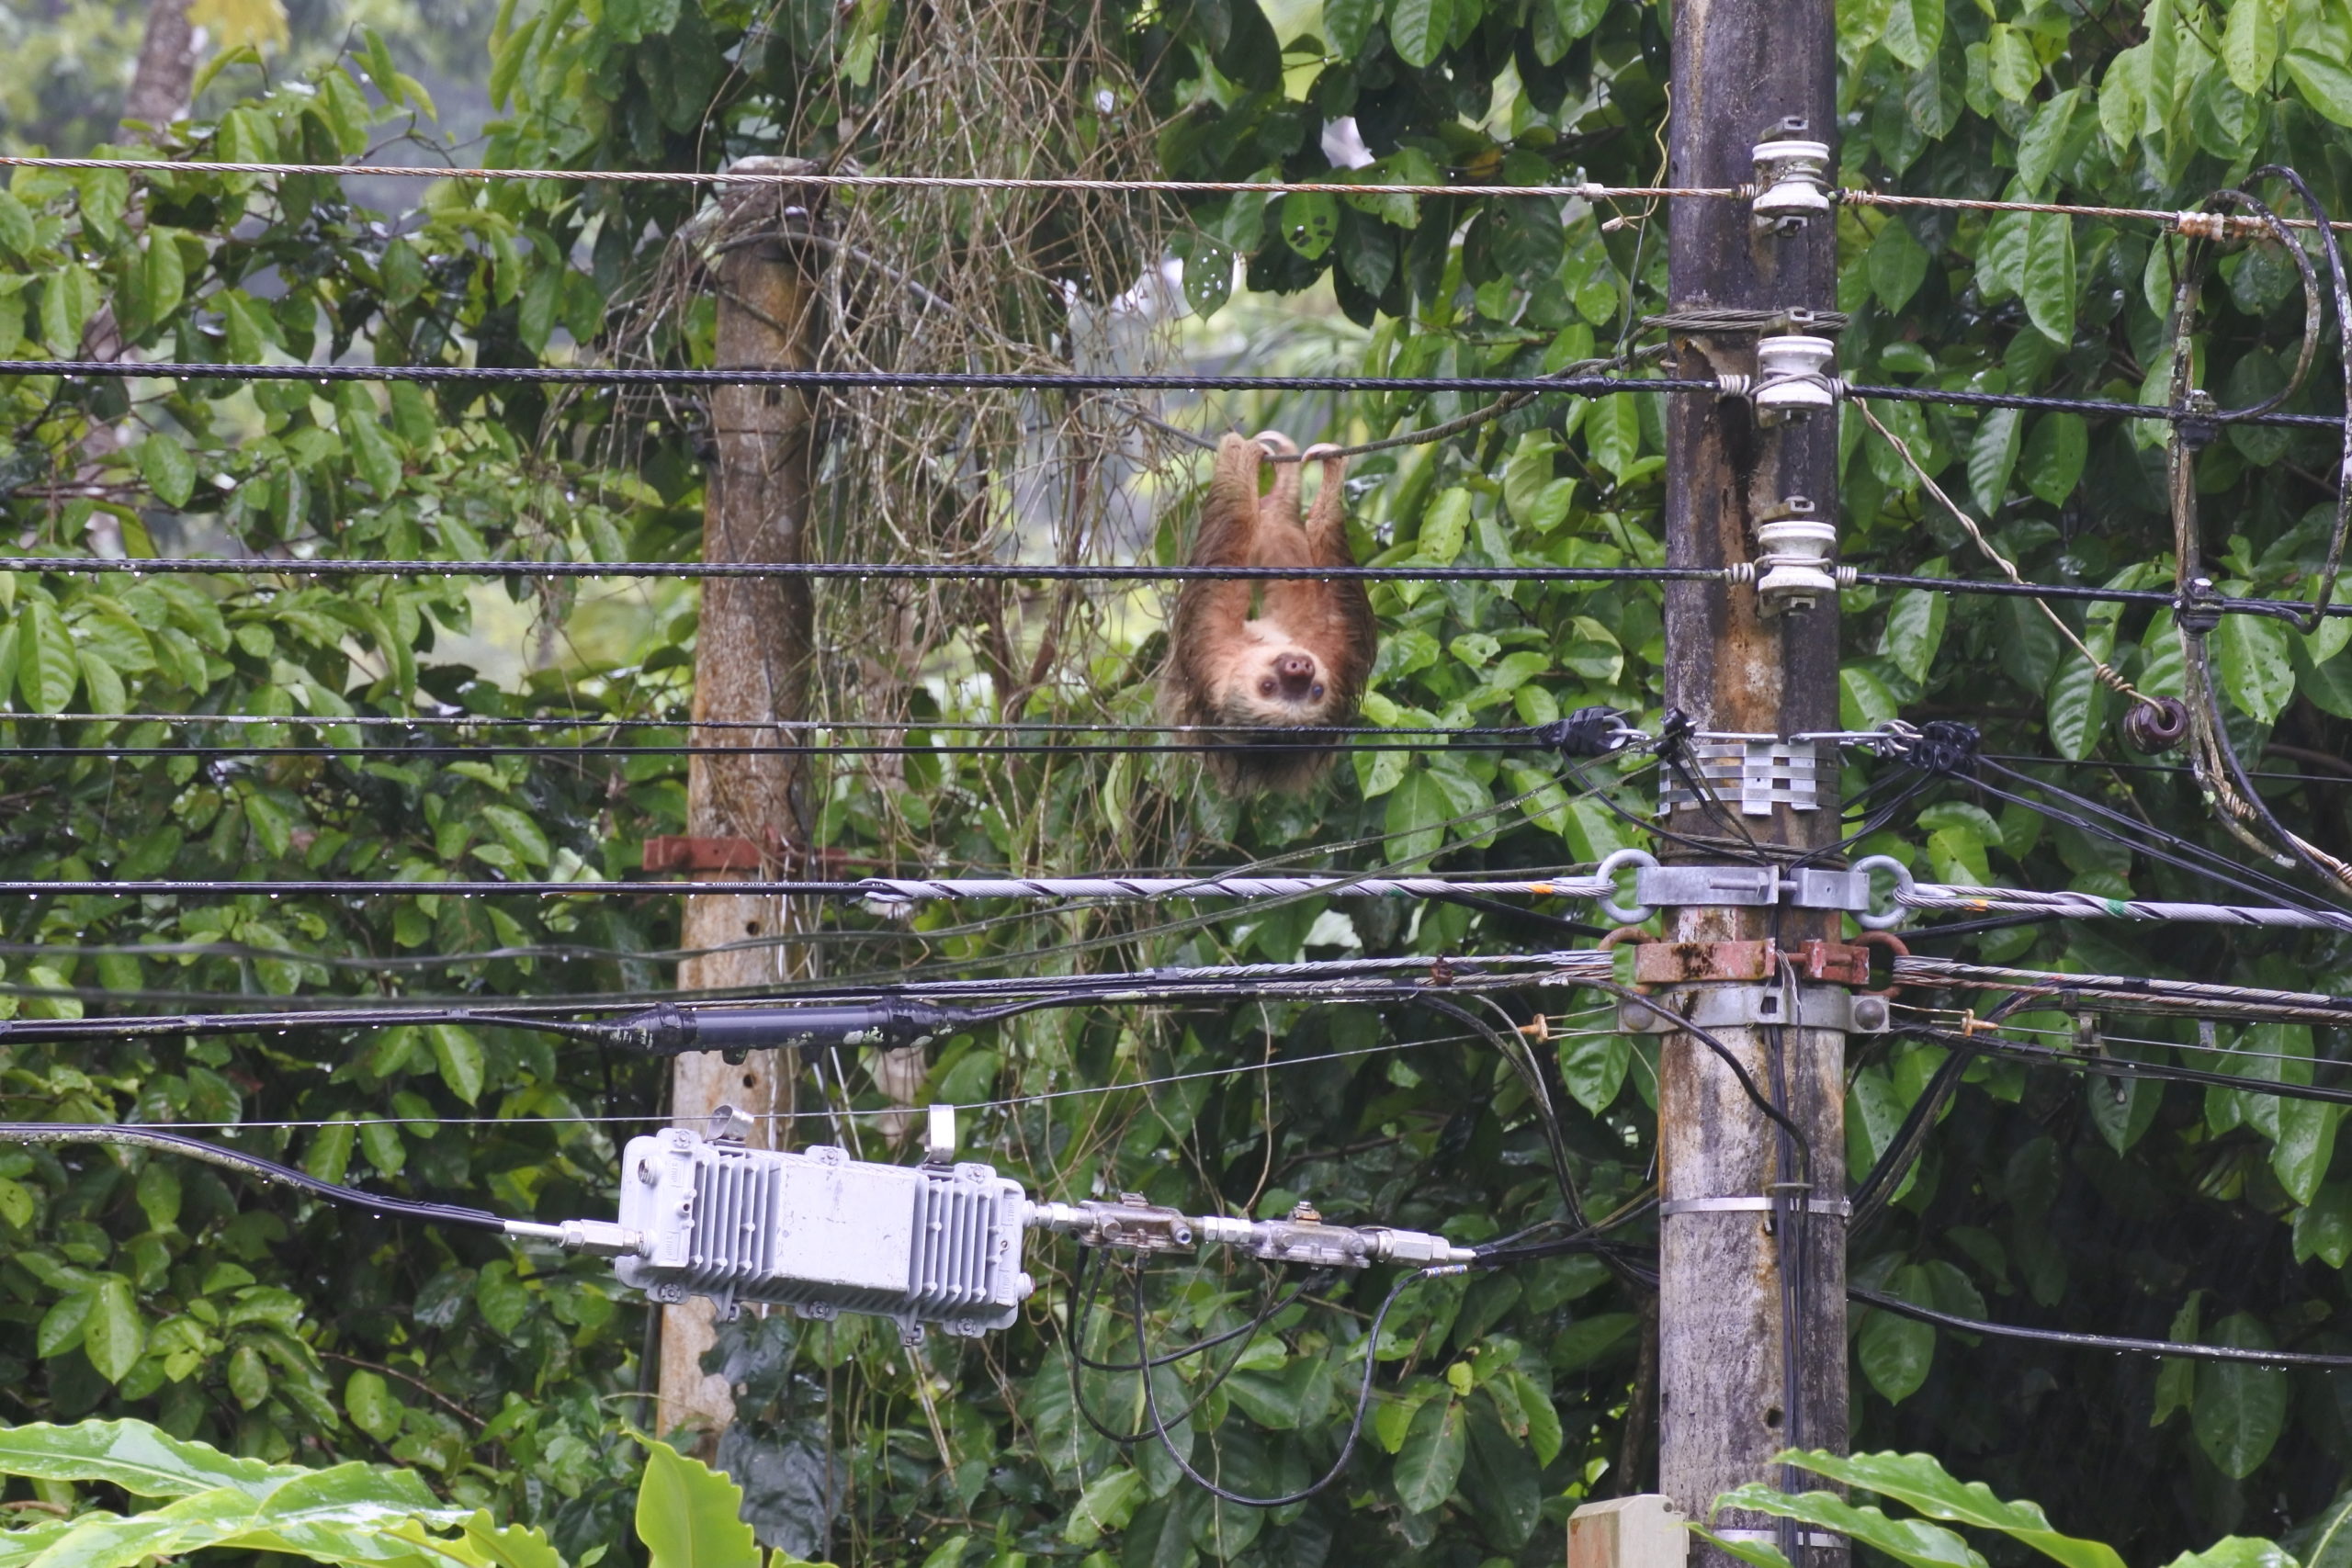 sloth on power line